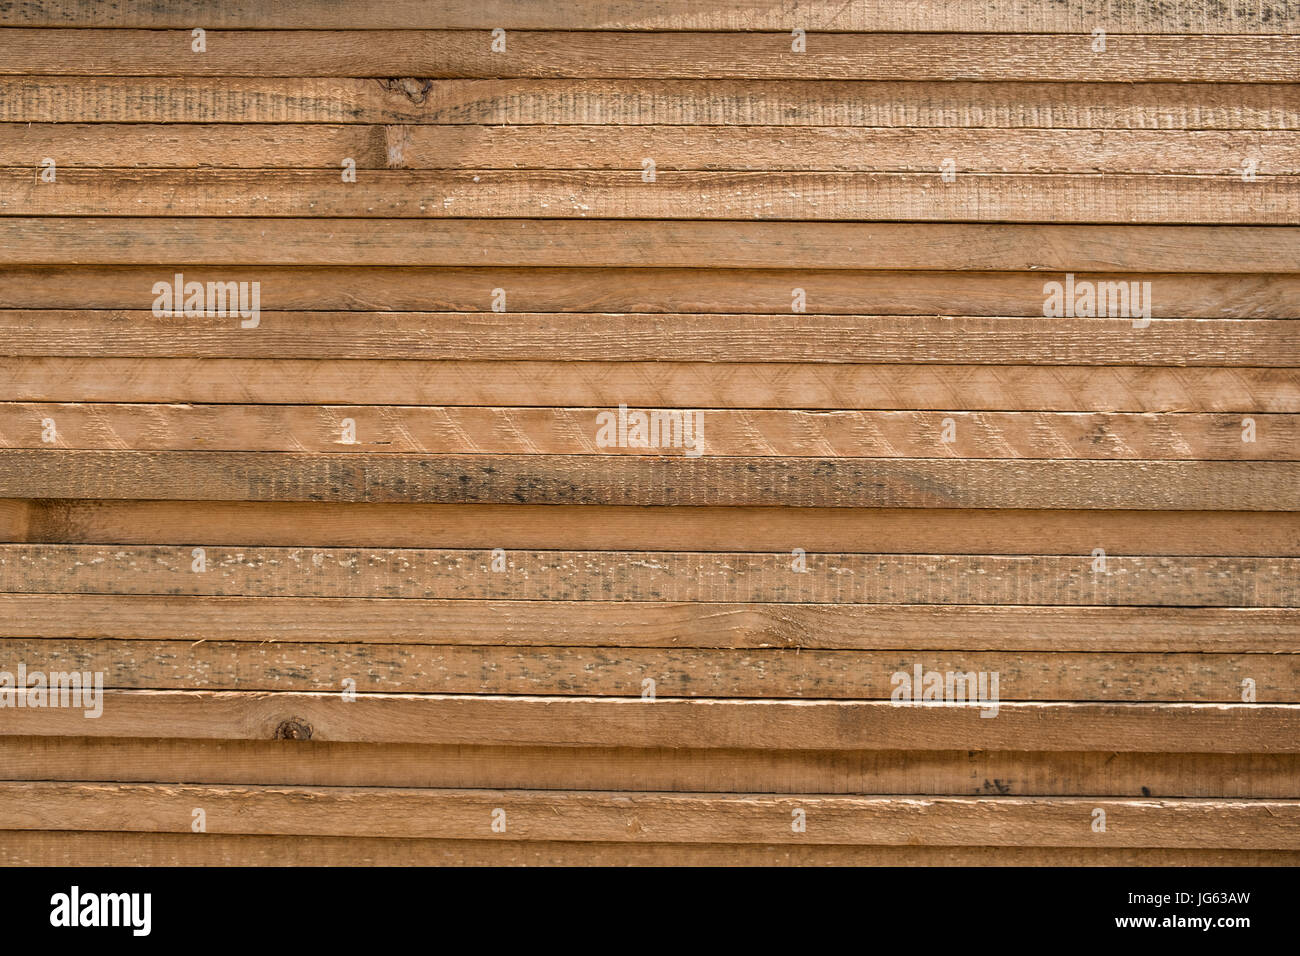 gestapelte Holz Bretter - Stapel Bretter aus Holz Hintergrund Stockfoto